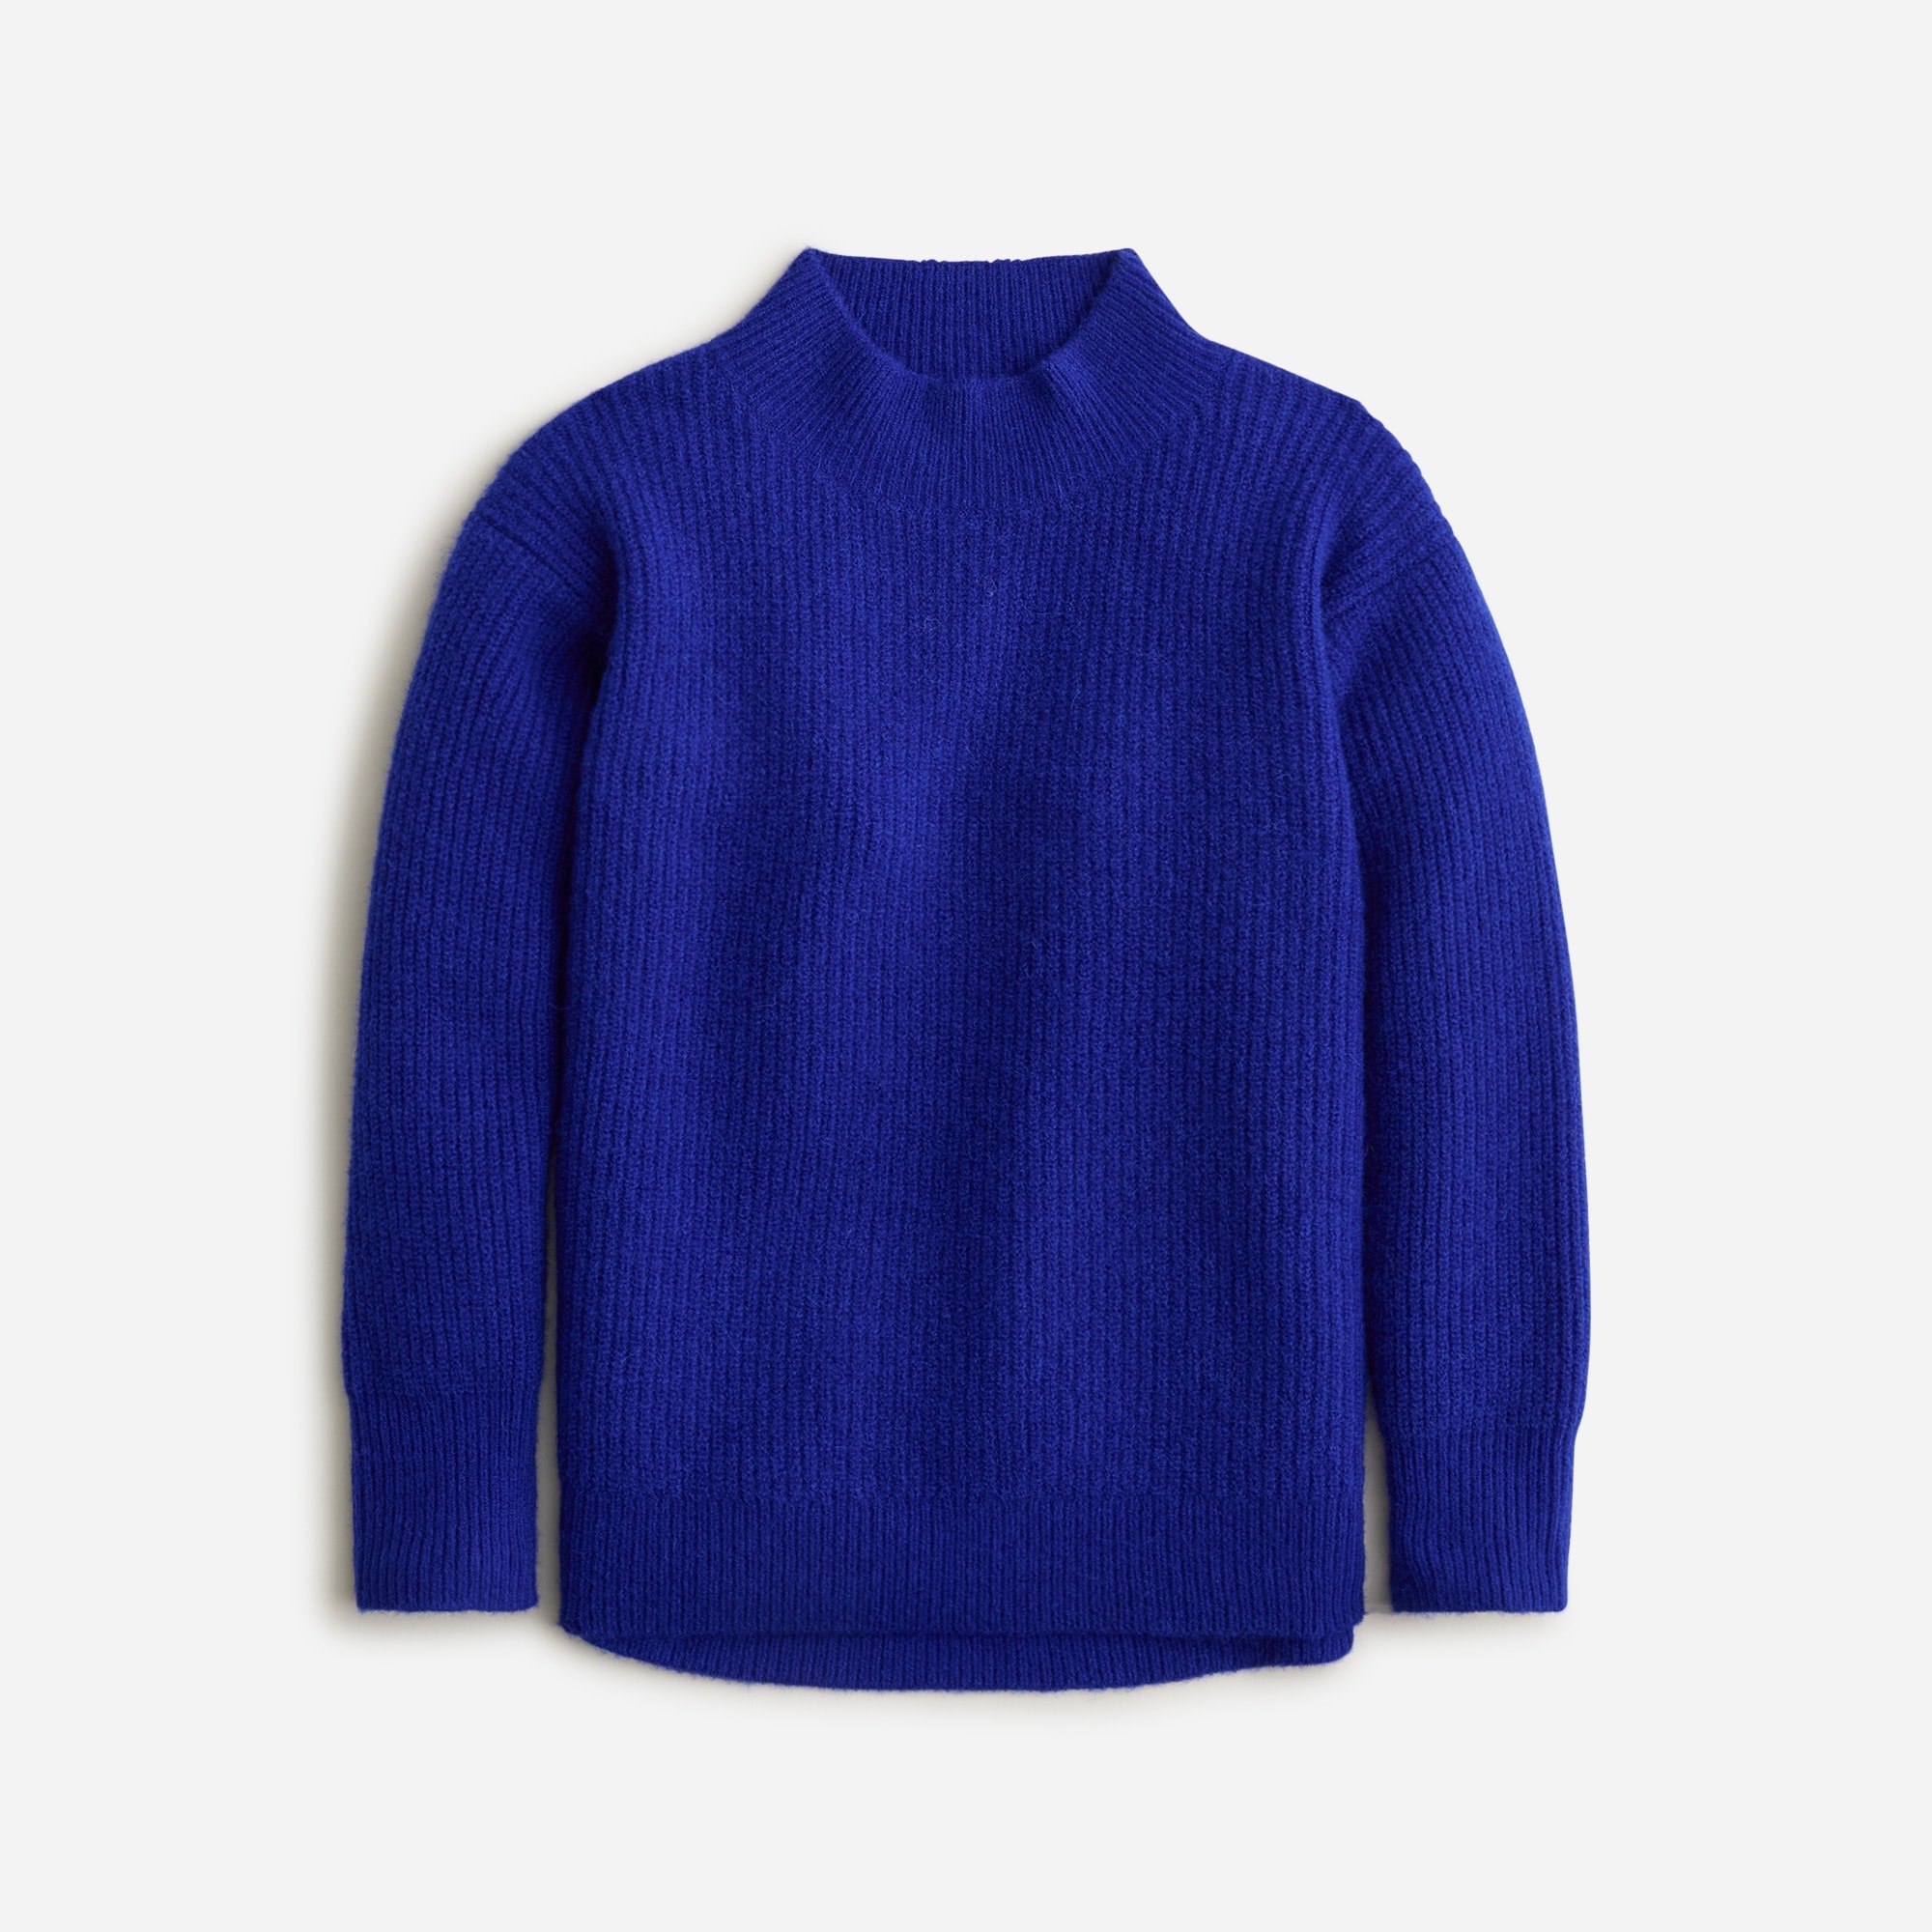  Girls' ribbed mockneck sweater in supersoft yarn